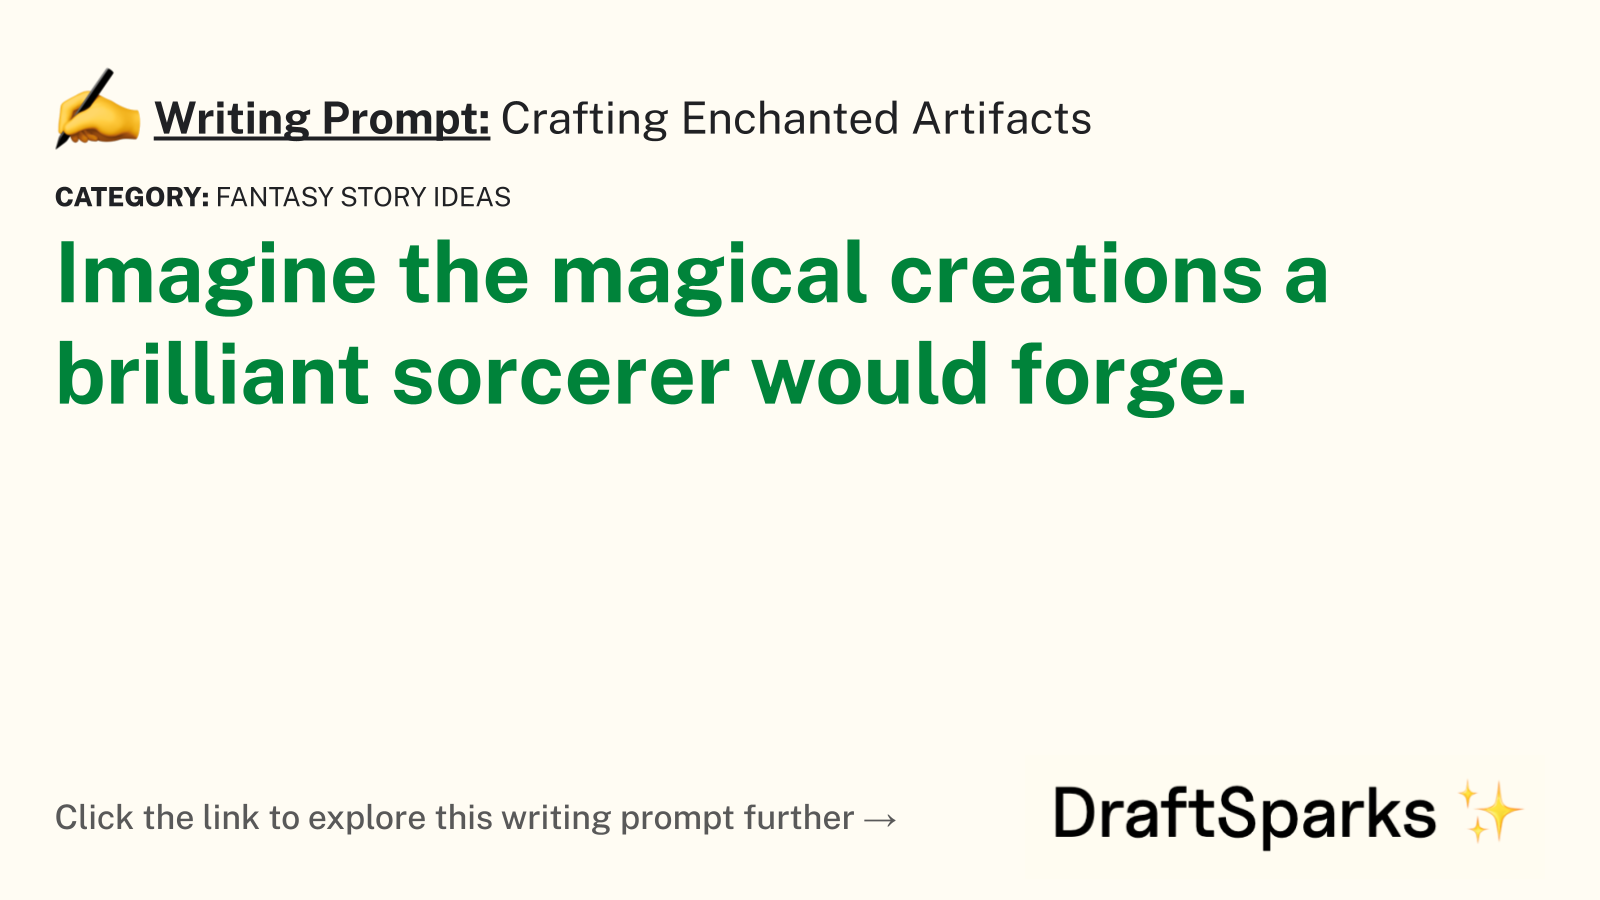 Crafting Enchanted Artifacts